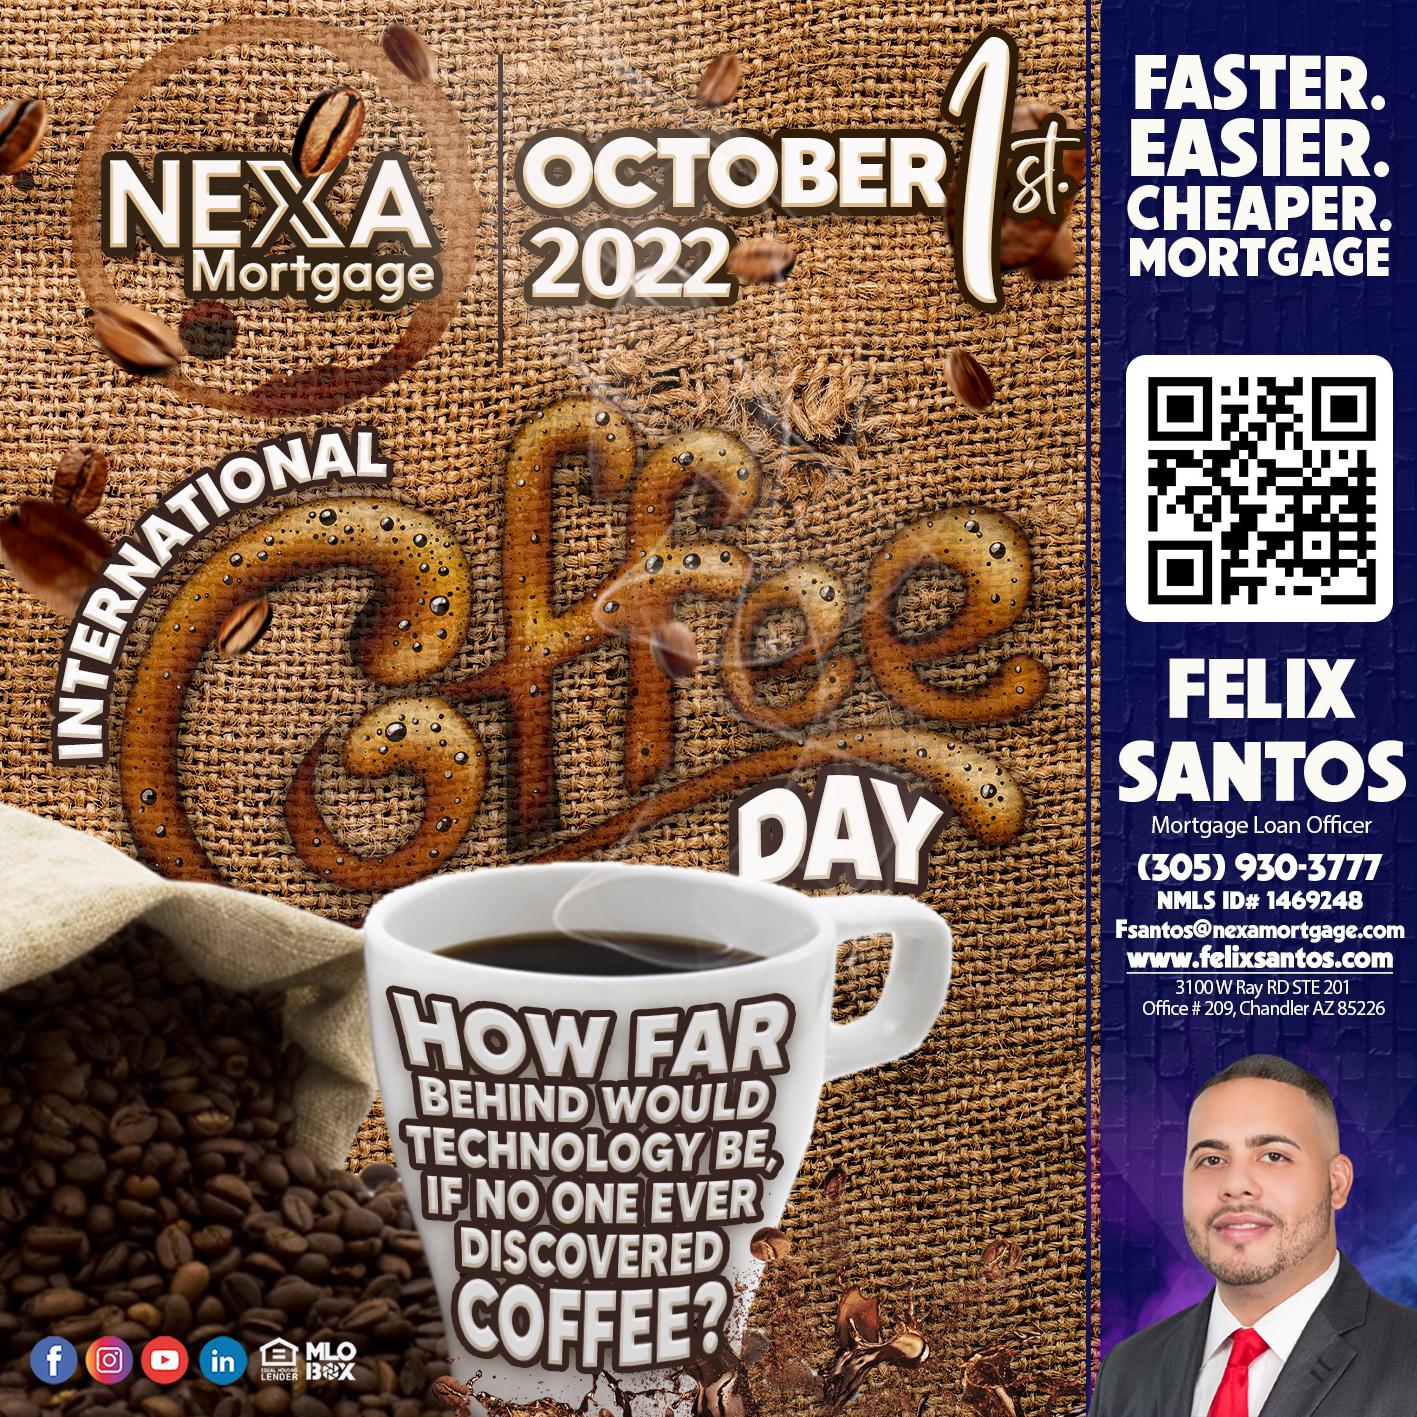 INTERNATIONAL COFFEE DAY 2022 - Felix Santos -Mortgage Loan Officer